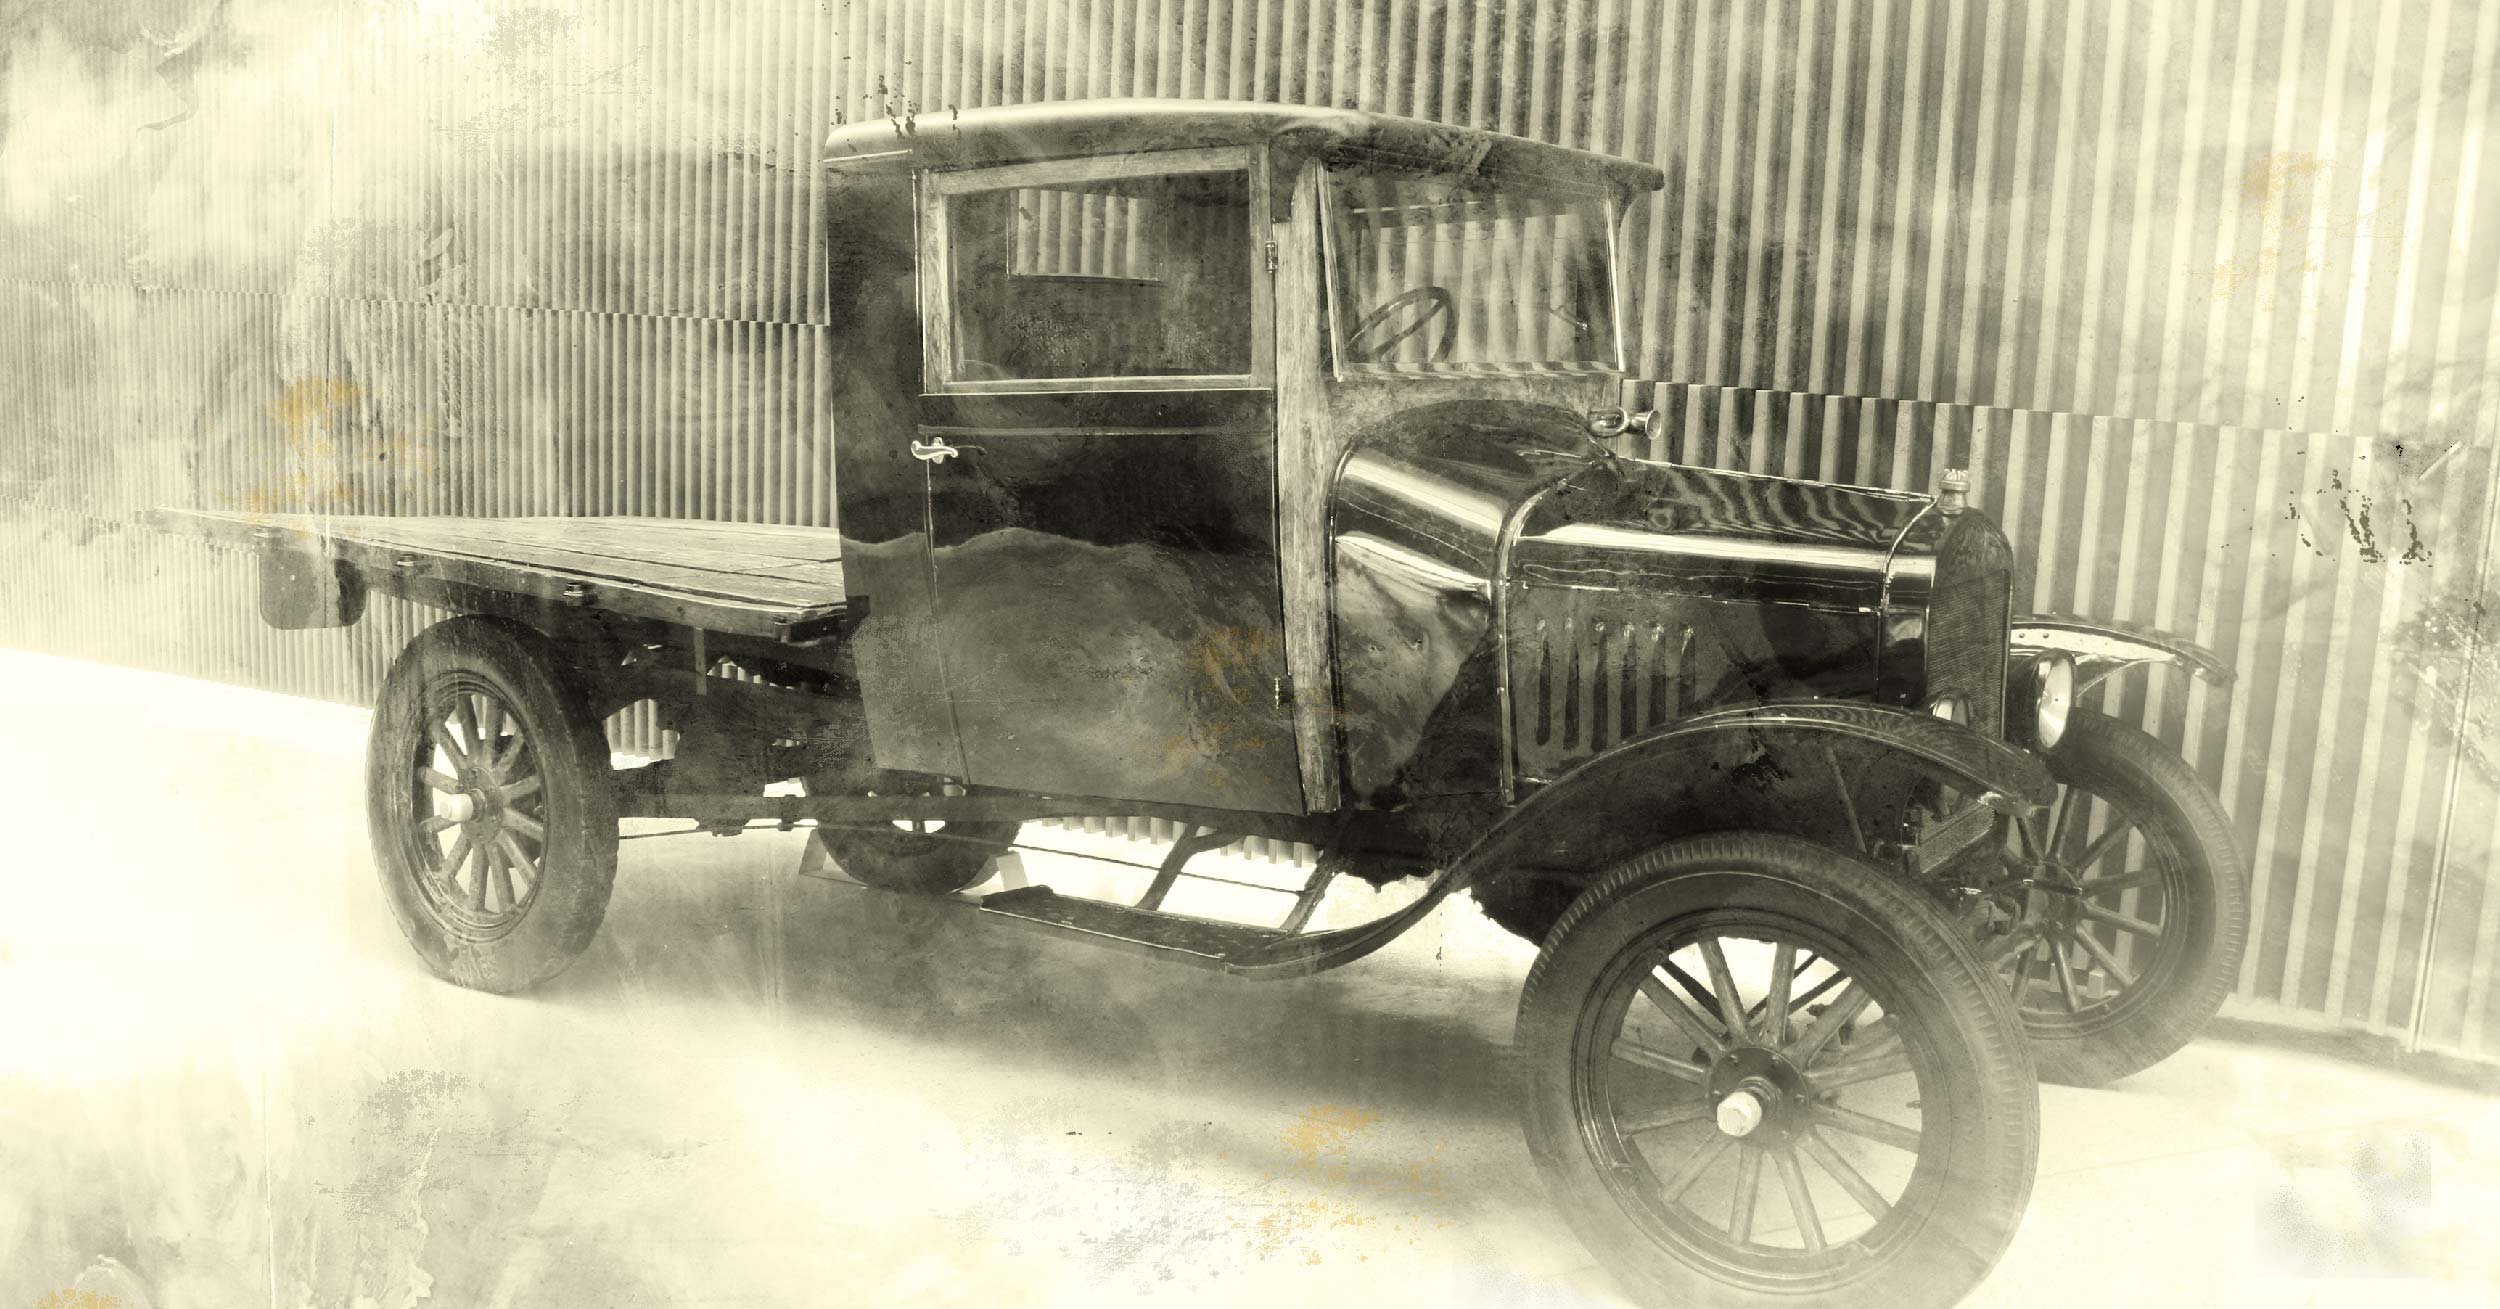 Historical brass era automobile